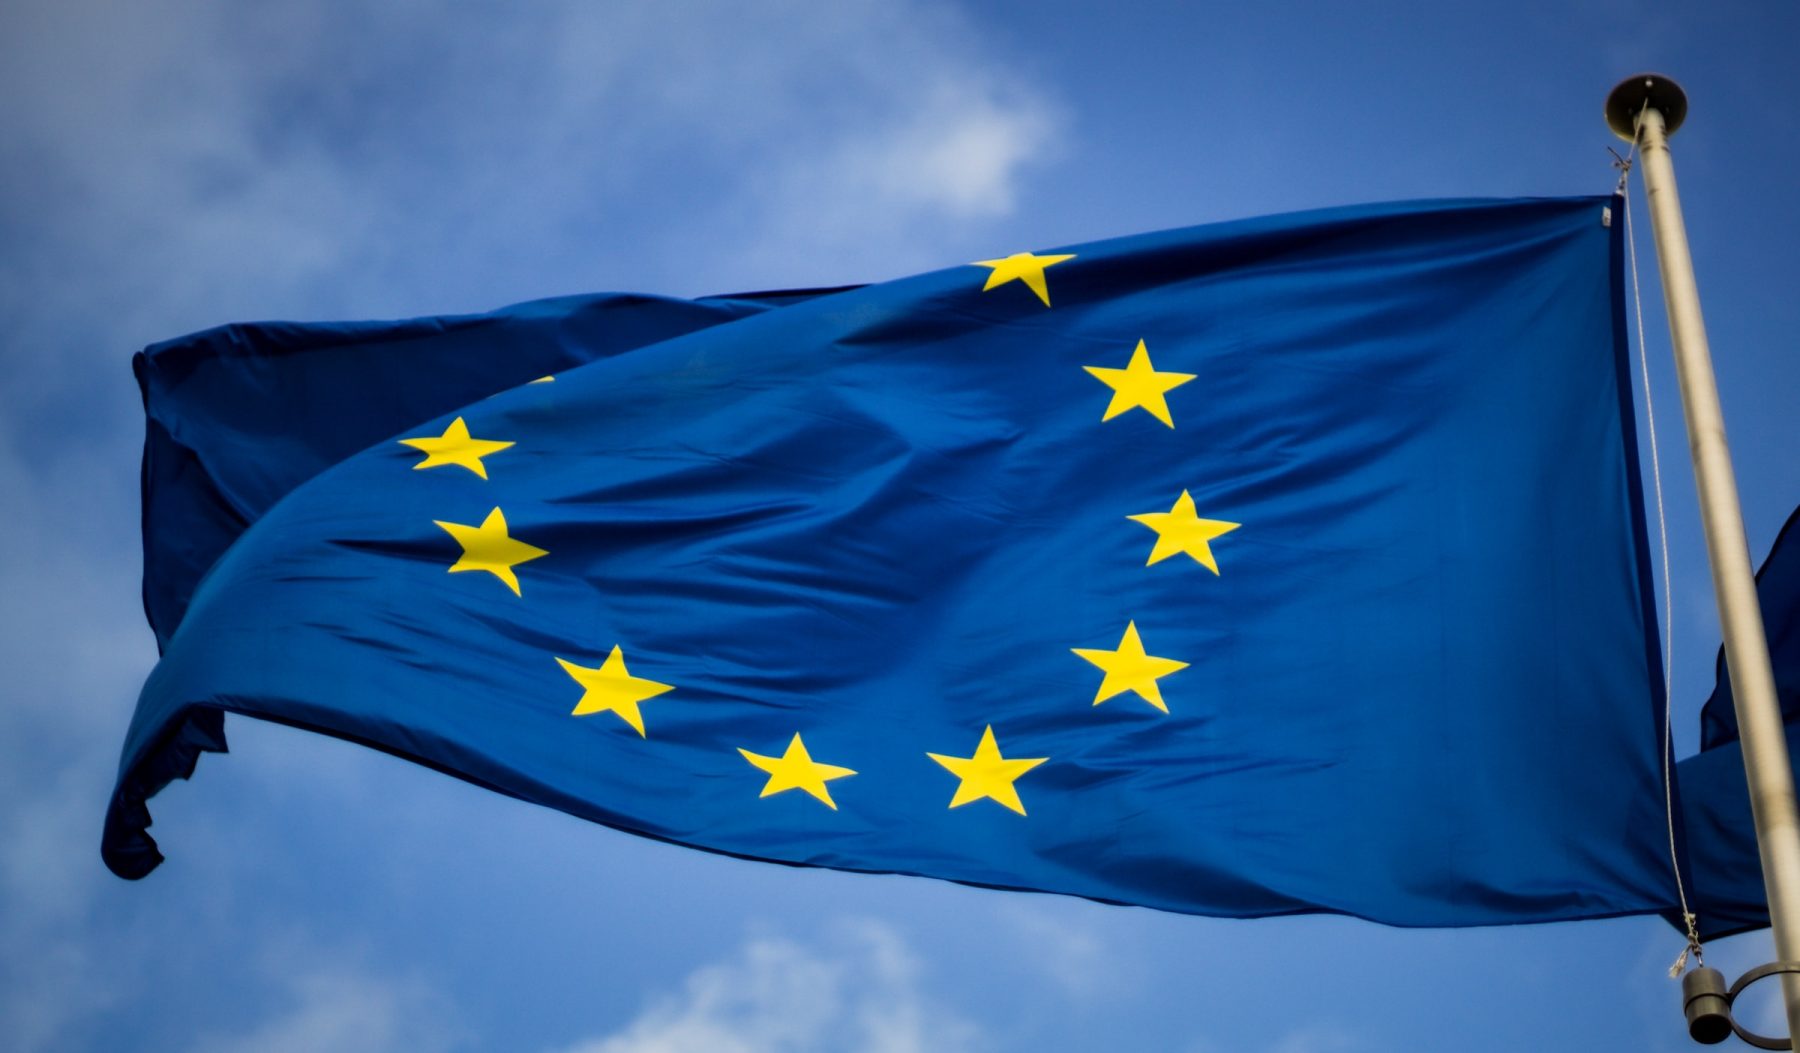 EU flag by Christian Lue via Unsplash